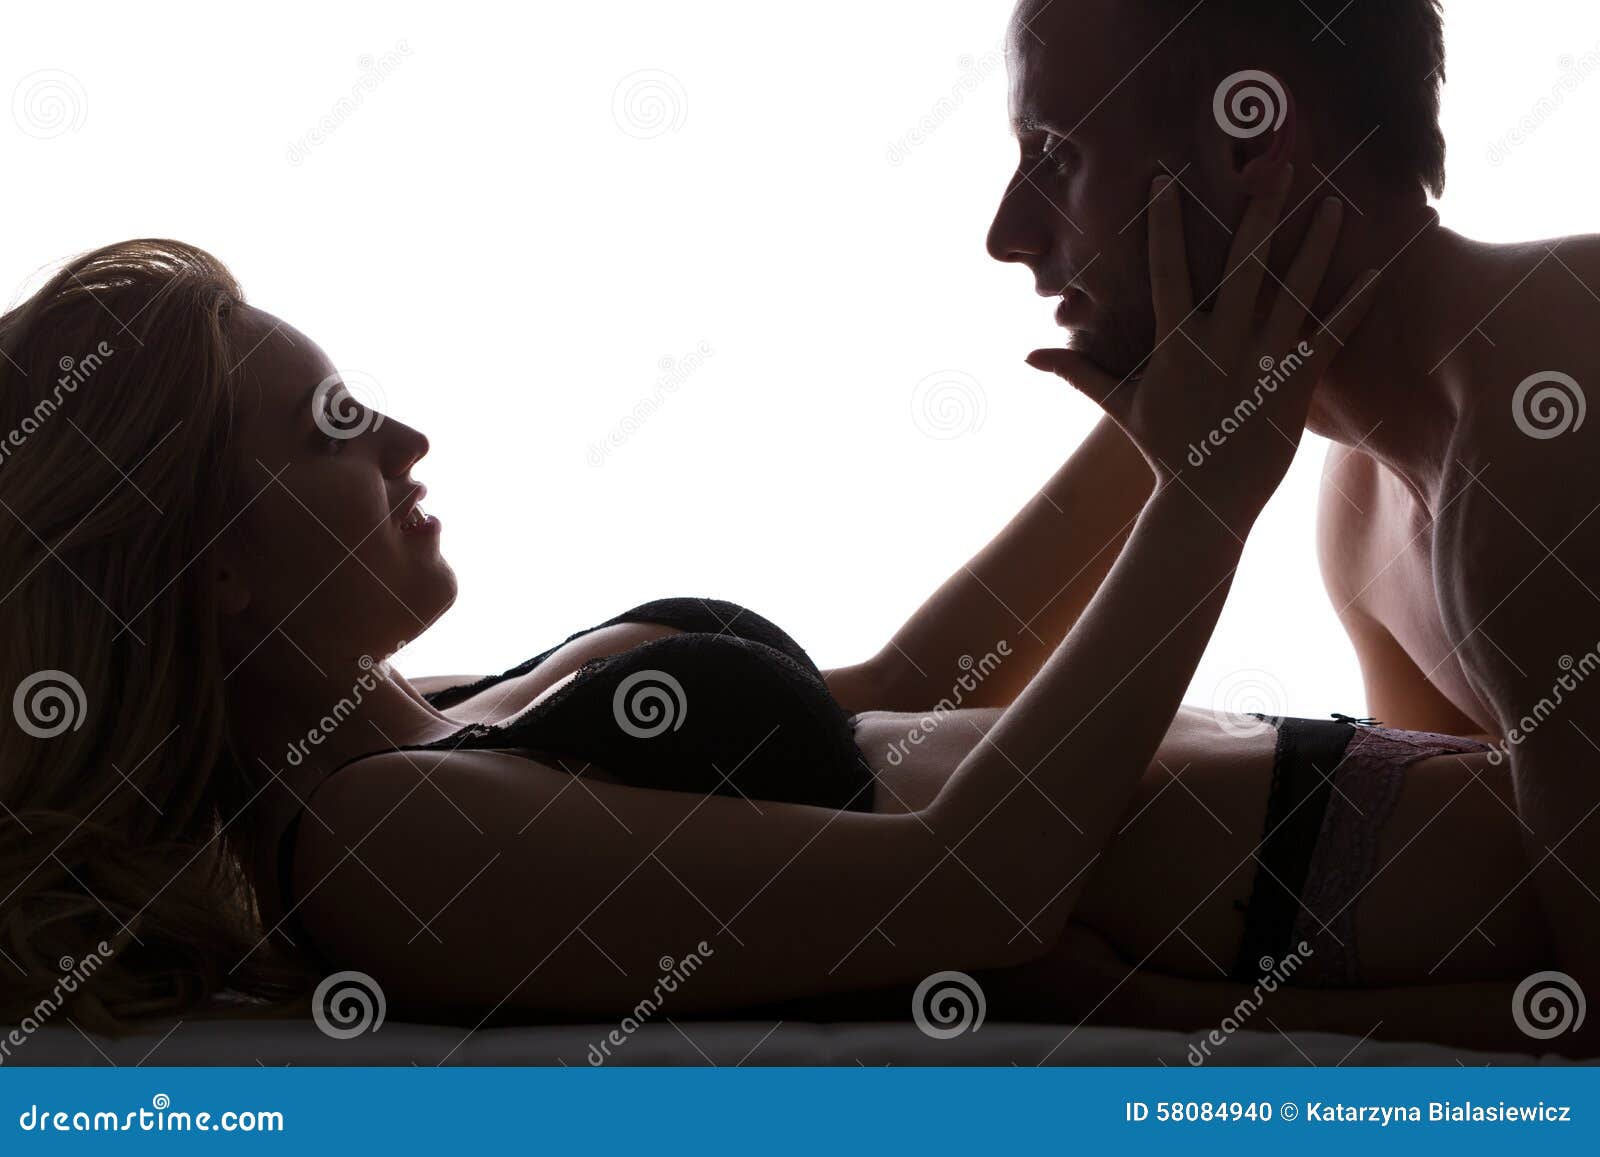 Man and woman making love emoji Man And Woman Making Love Stock Photo Image Of Body 58084940